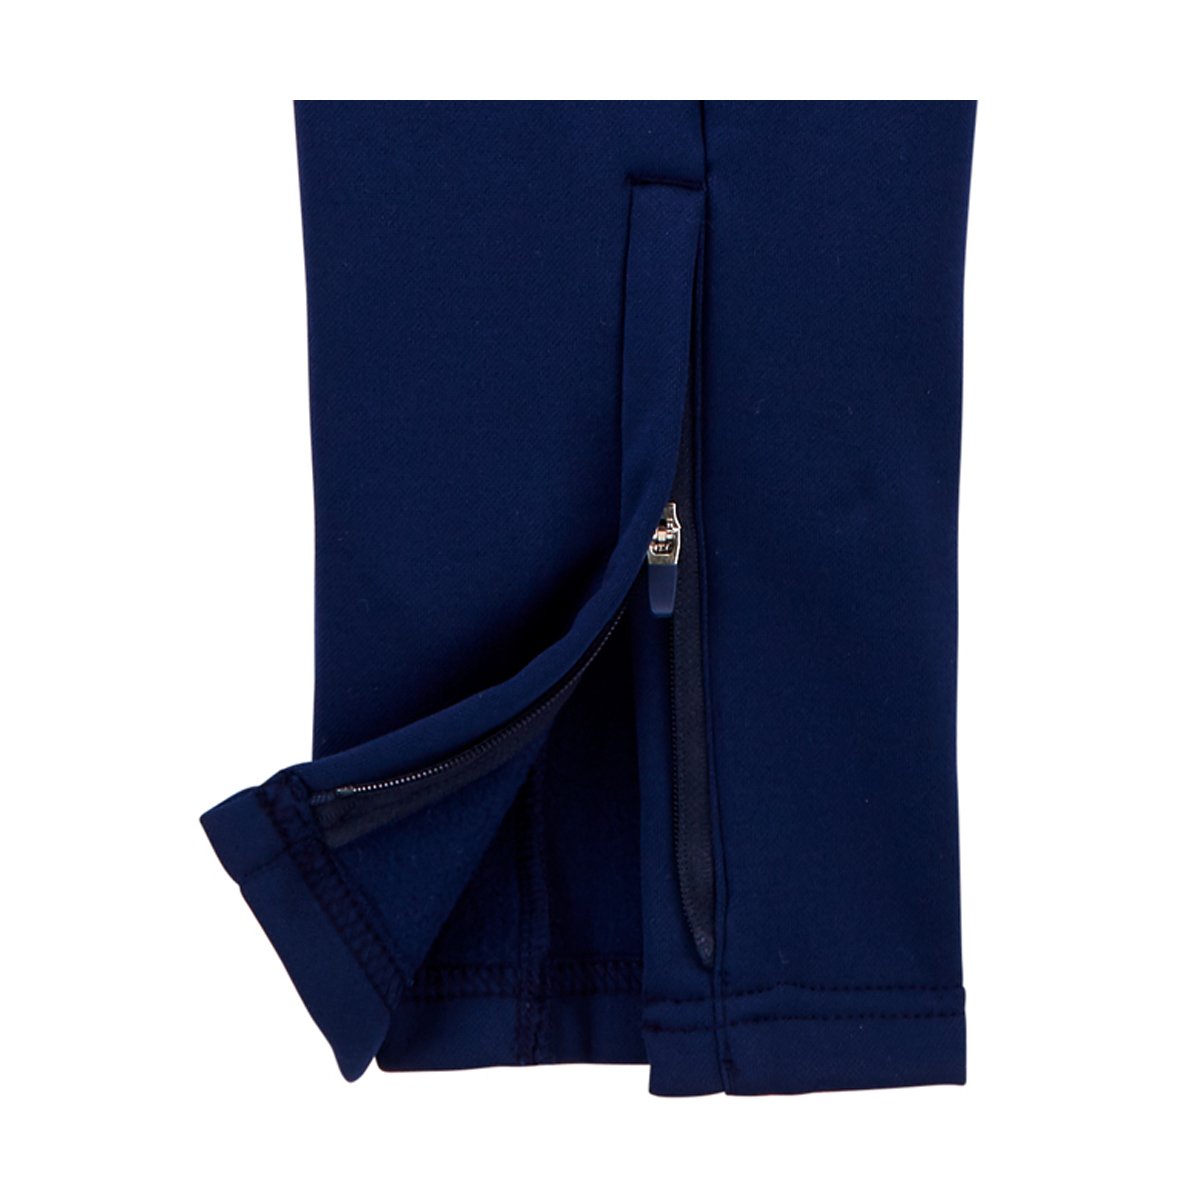 Pants Azul para Niño Osh Kosh Modelo 3I792217